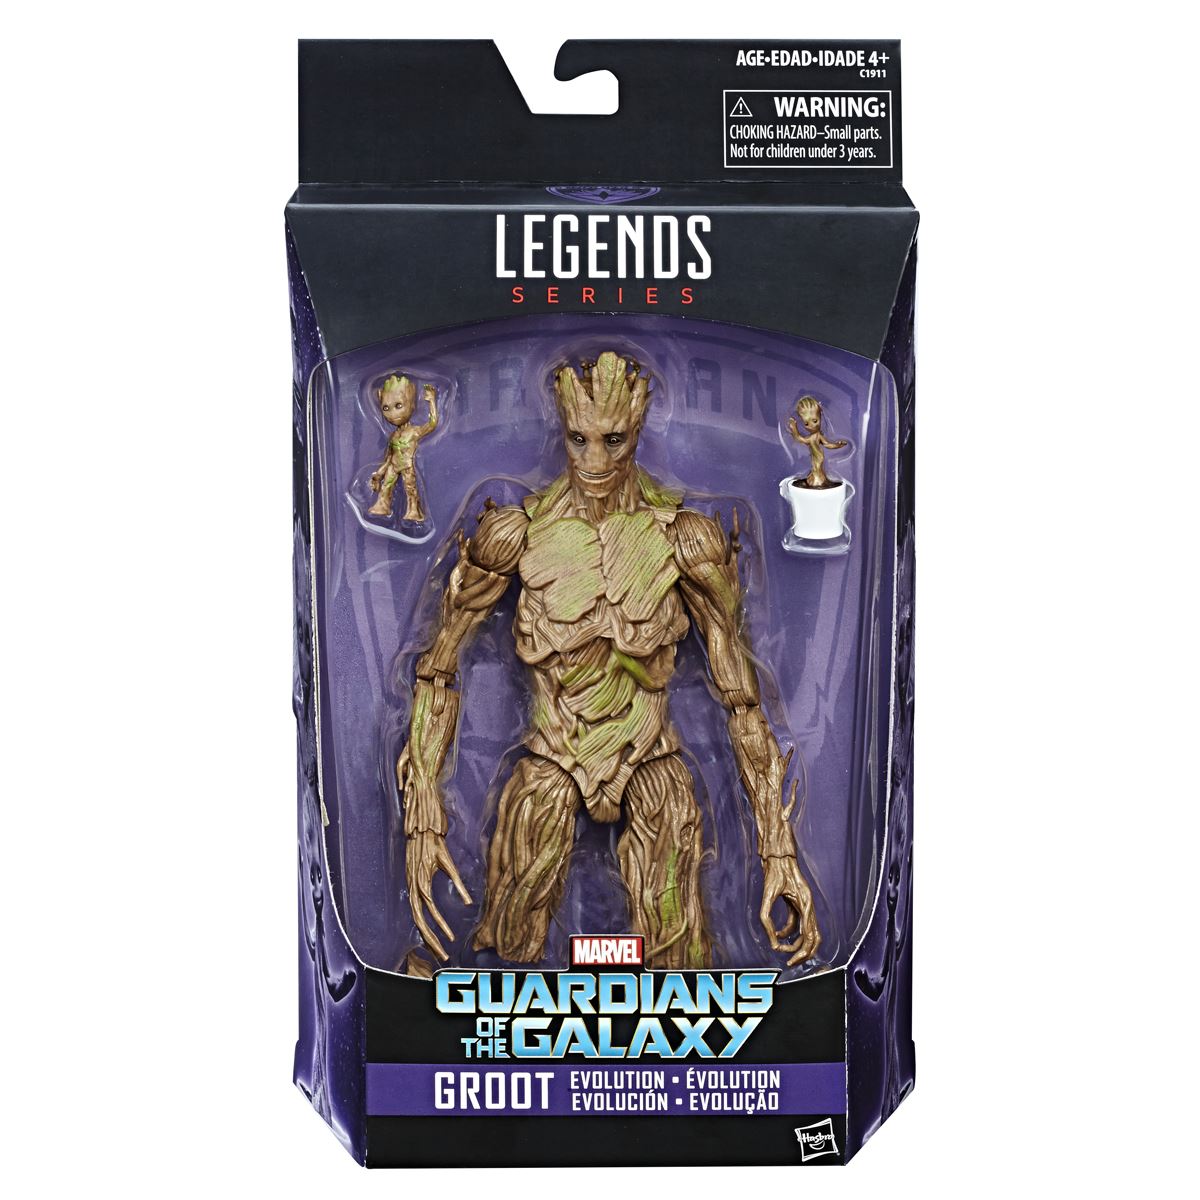 GGM 6" Legends Groot Evolution 3PK